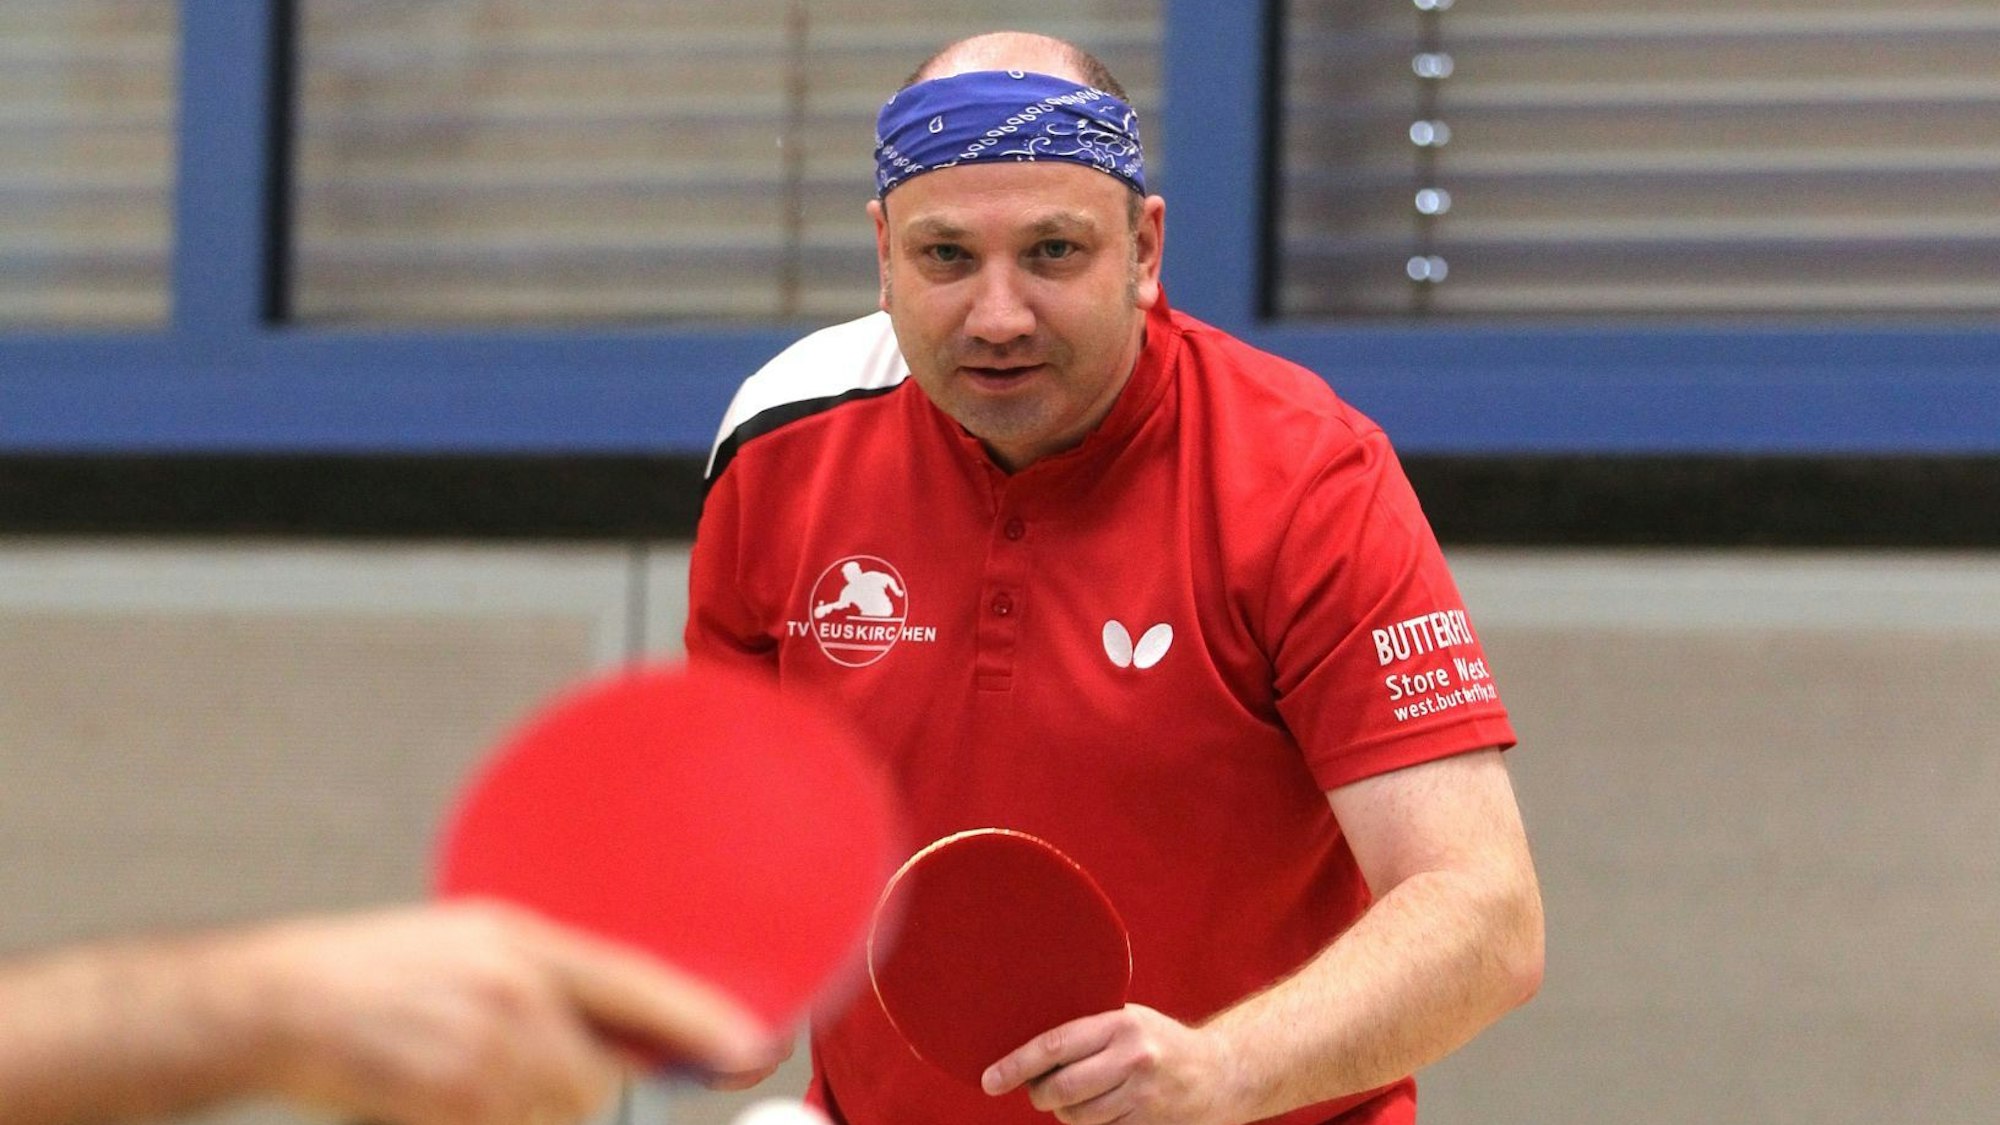 Der Euskirchener Tischtennisspieler René Strotkötter beim Ballwechsel.